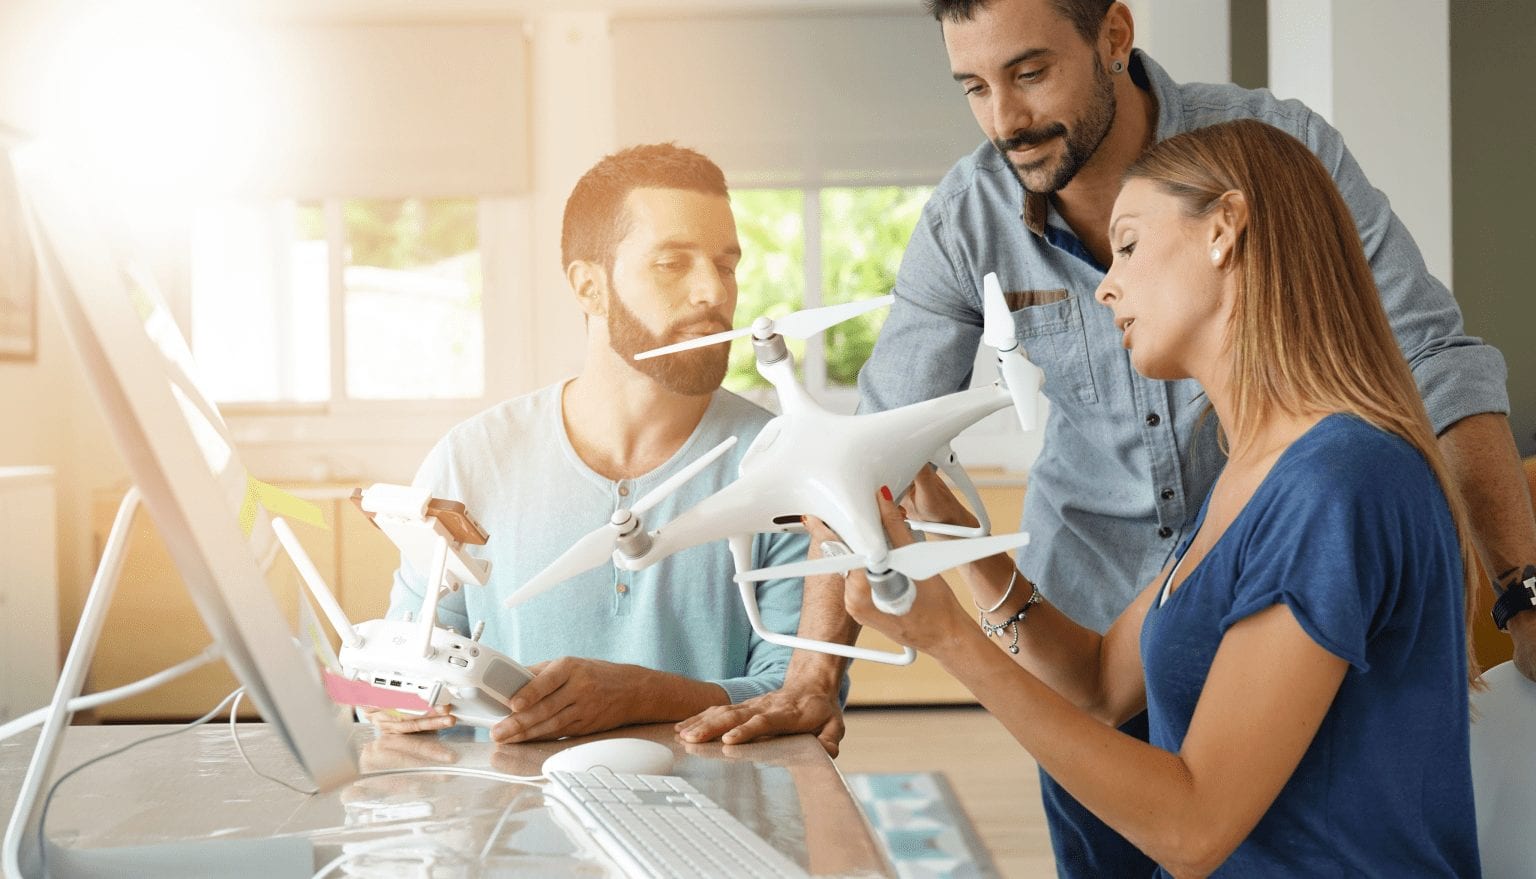 Drones in Insurance Industry 2020